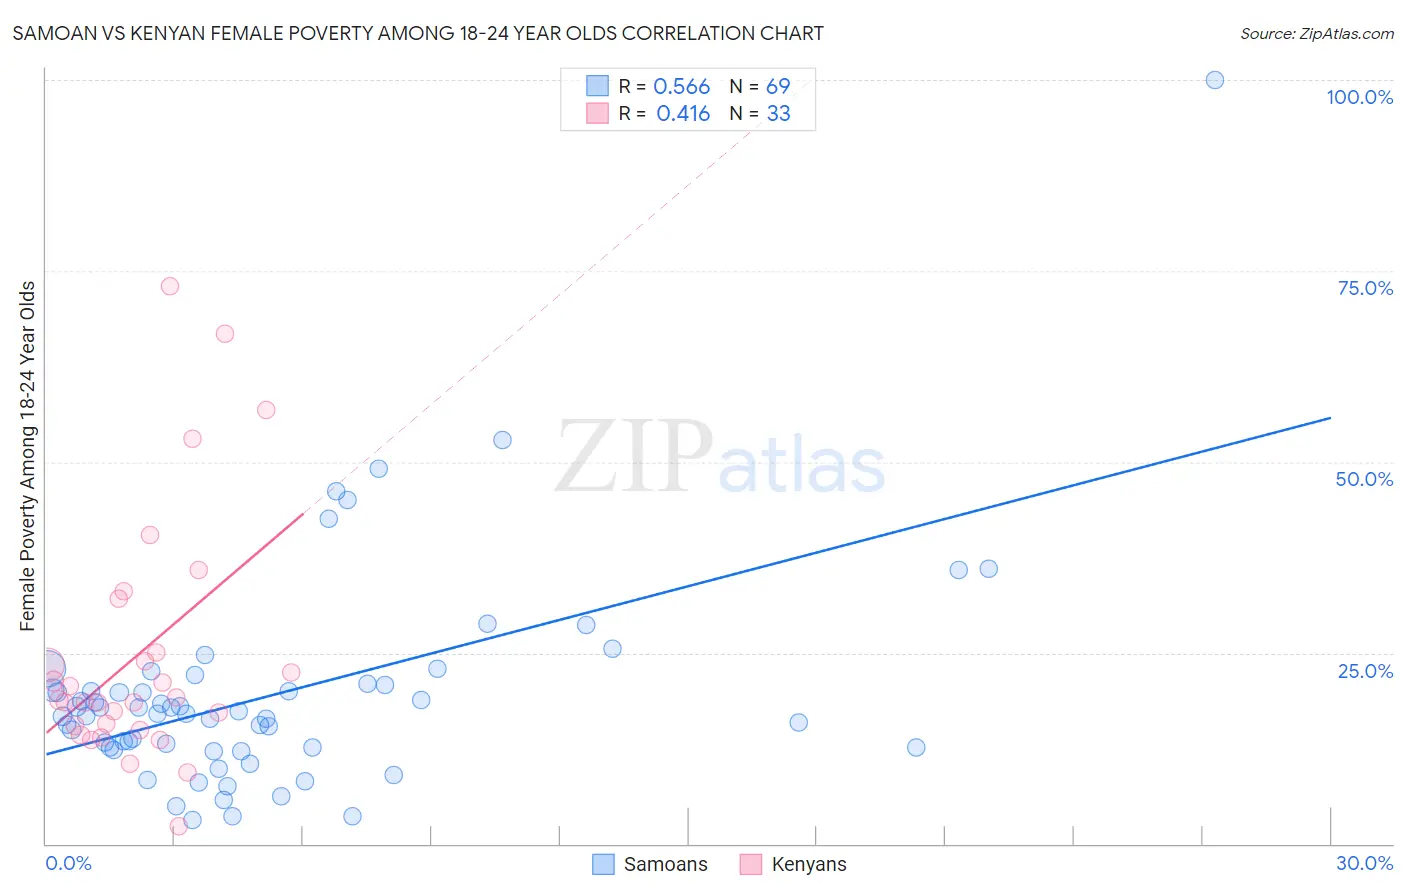 Samoan vs Kenyan Female Poverty Among 18-24 Year Olds